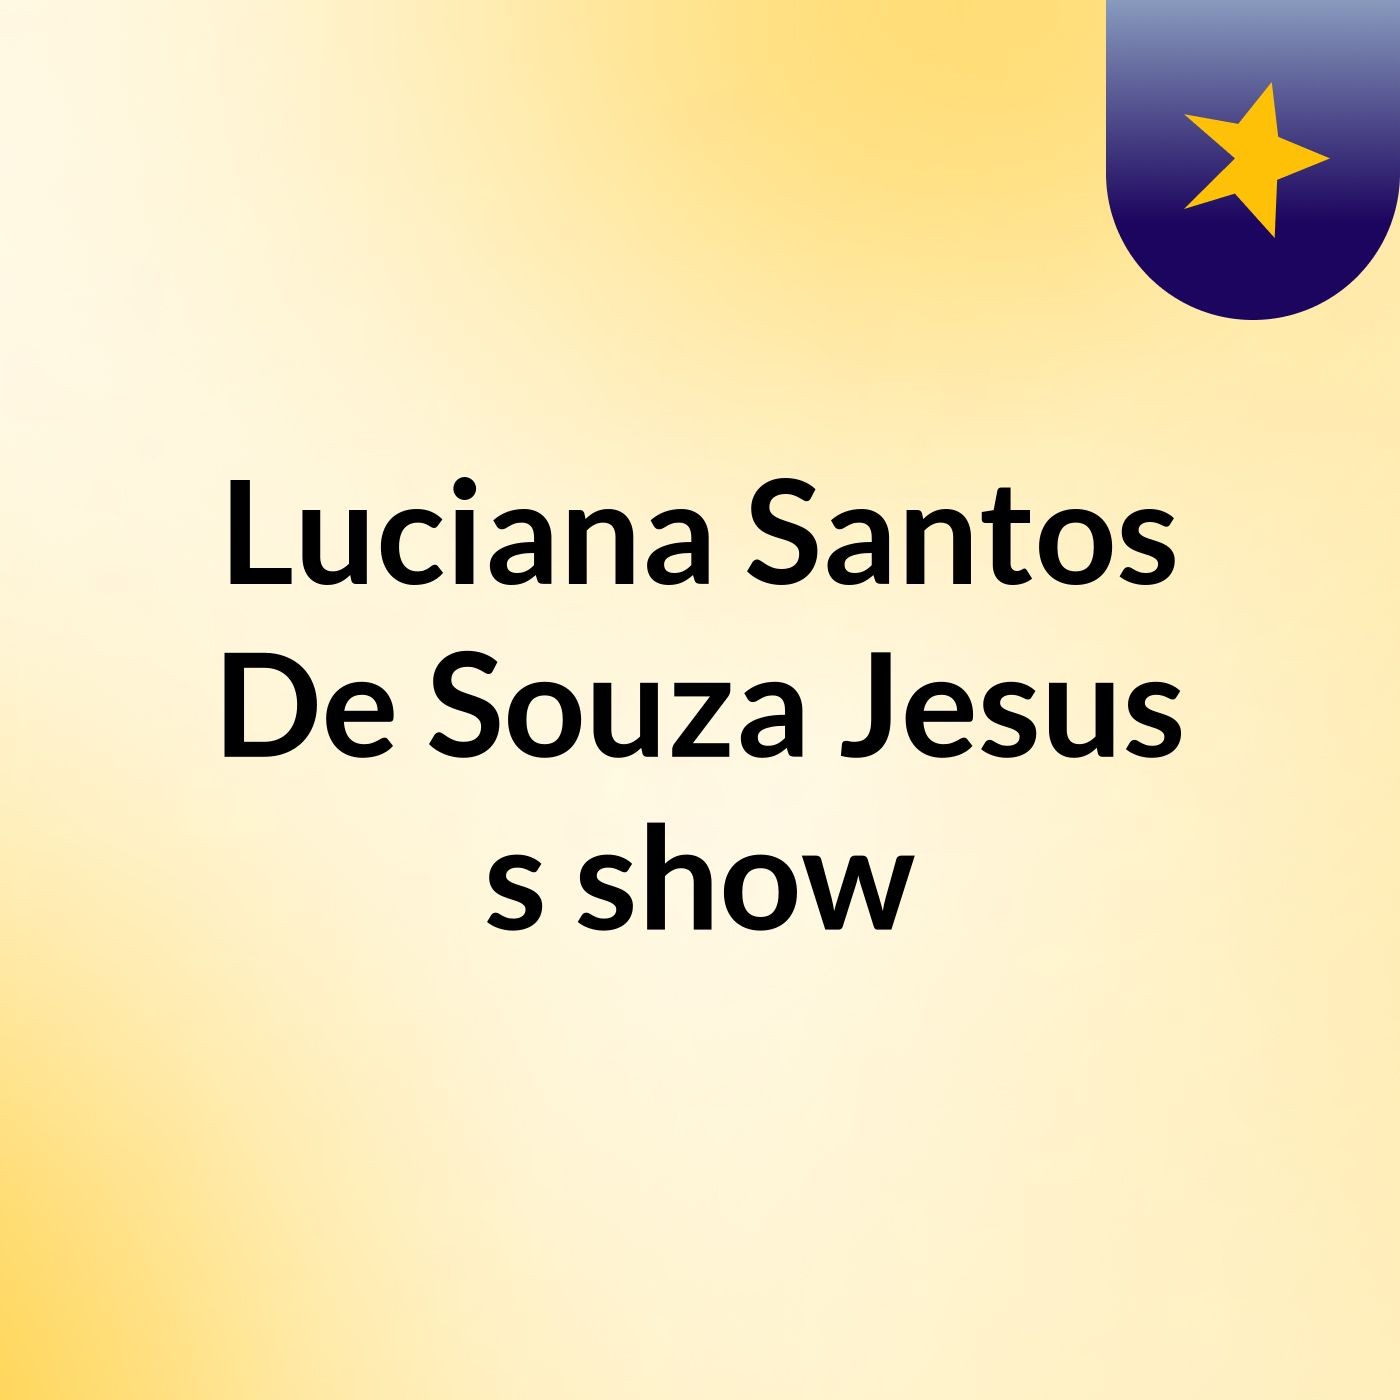 Luciana Santos De Souza Jesus's show